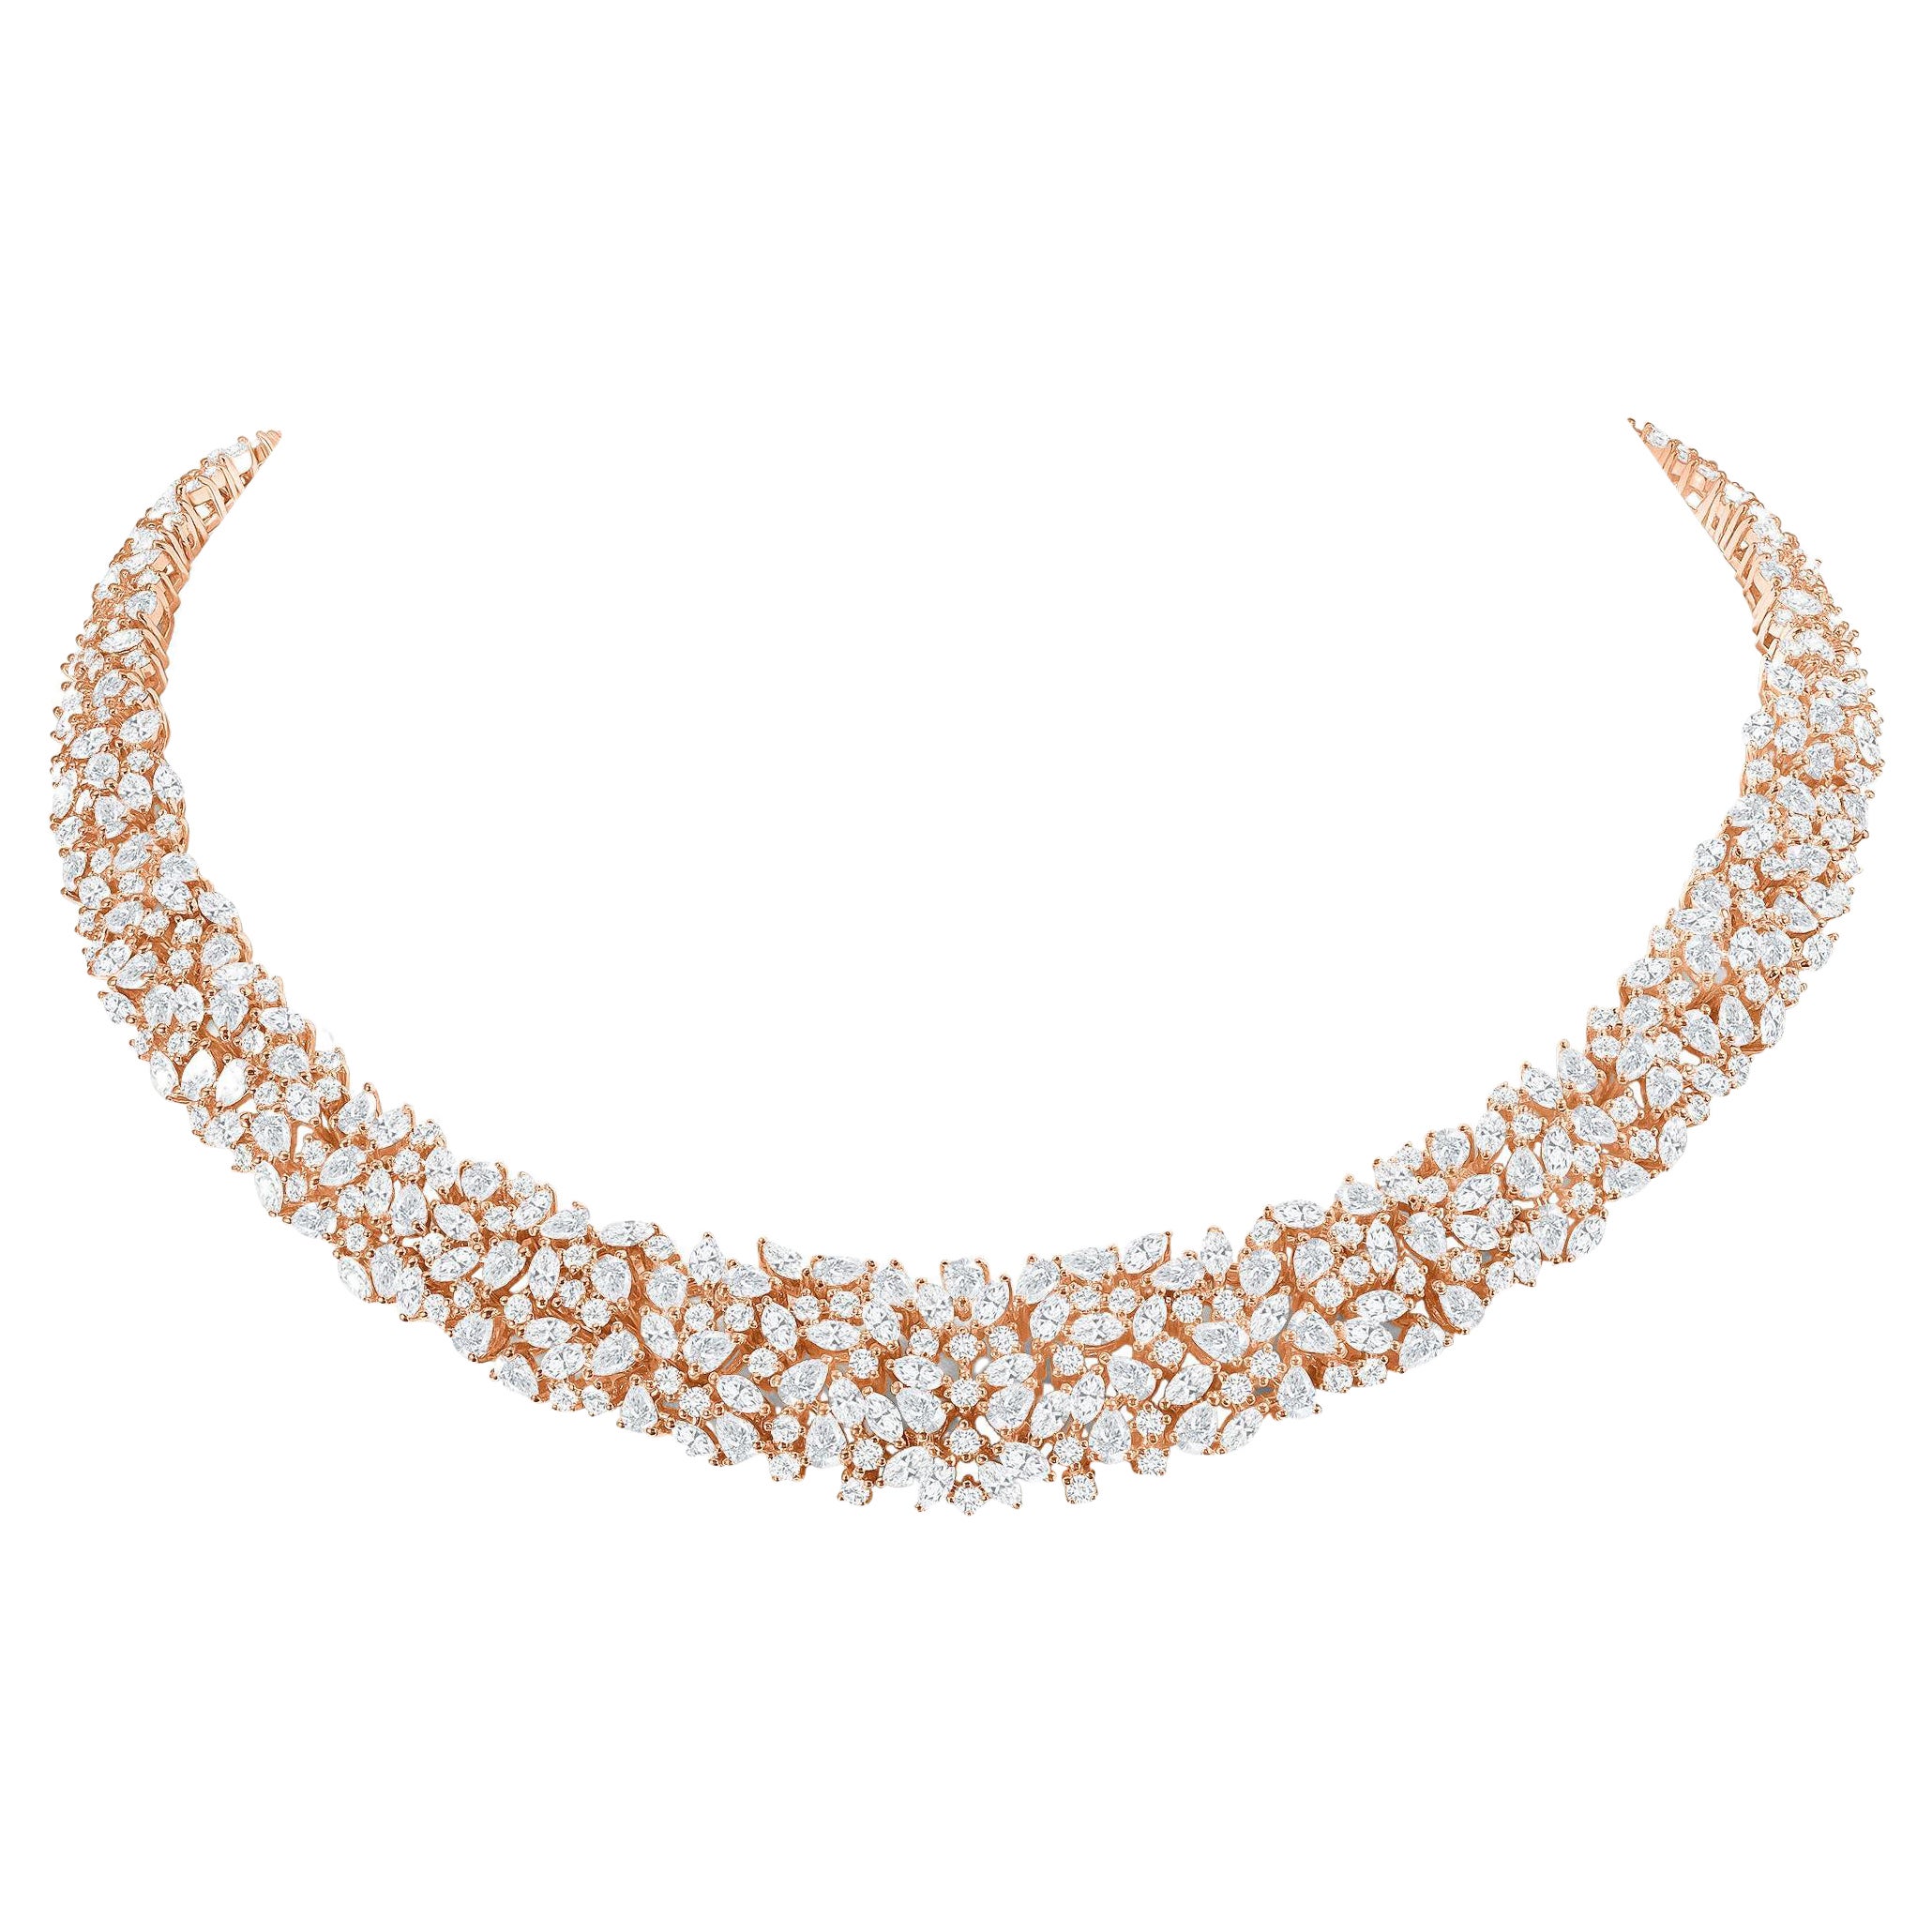 30 Carat Diamond Cluster Necklace, 18K Rose Gold For Sale